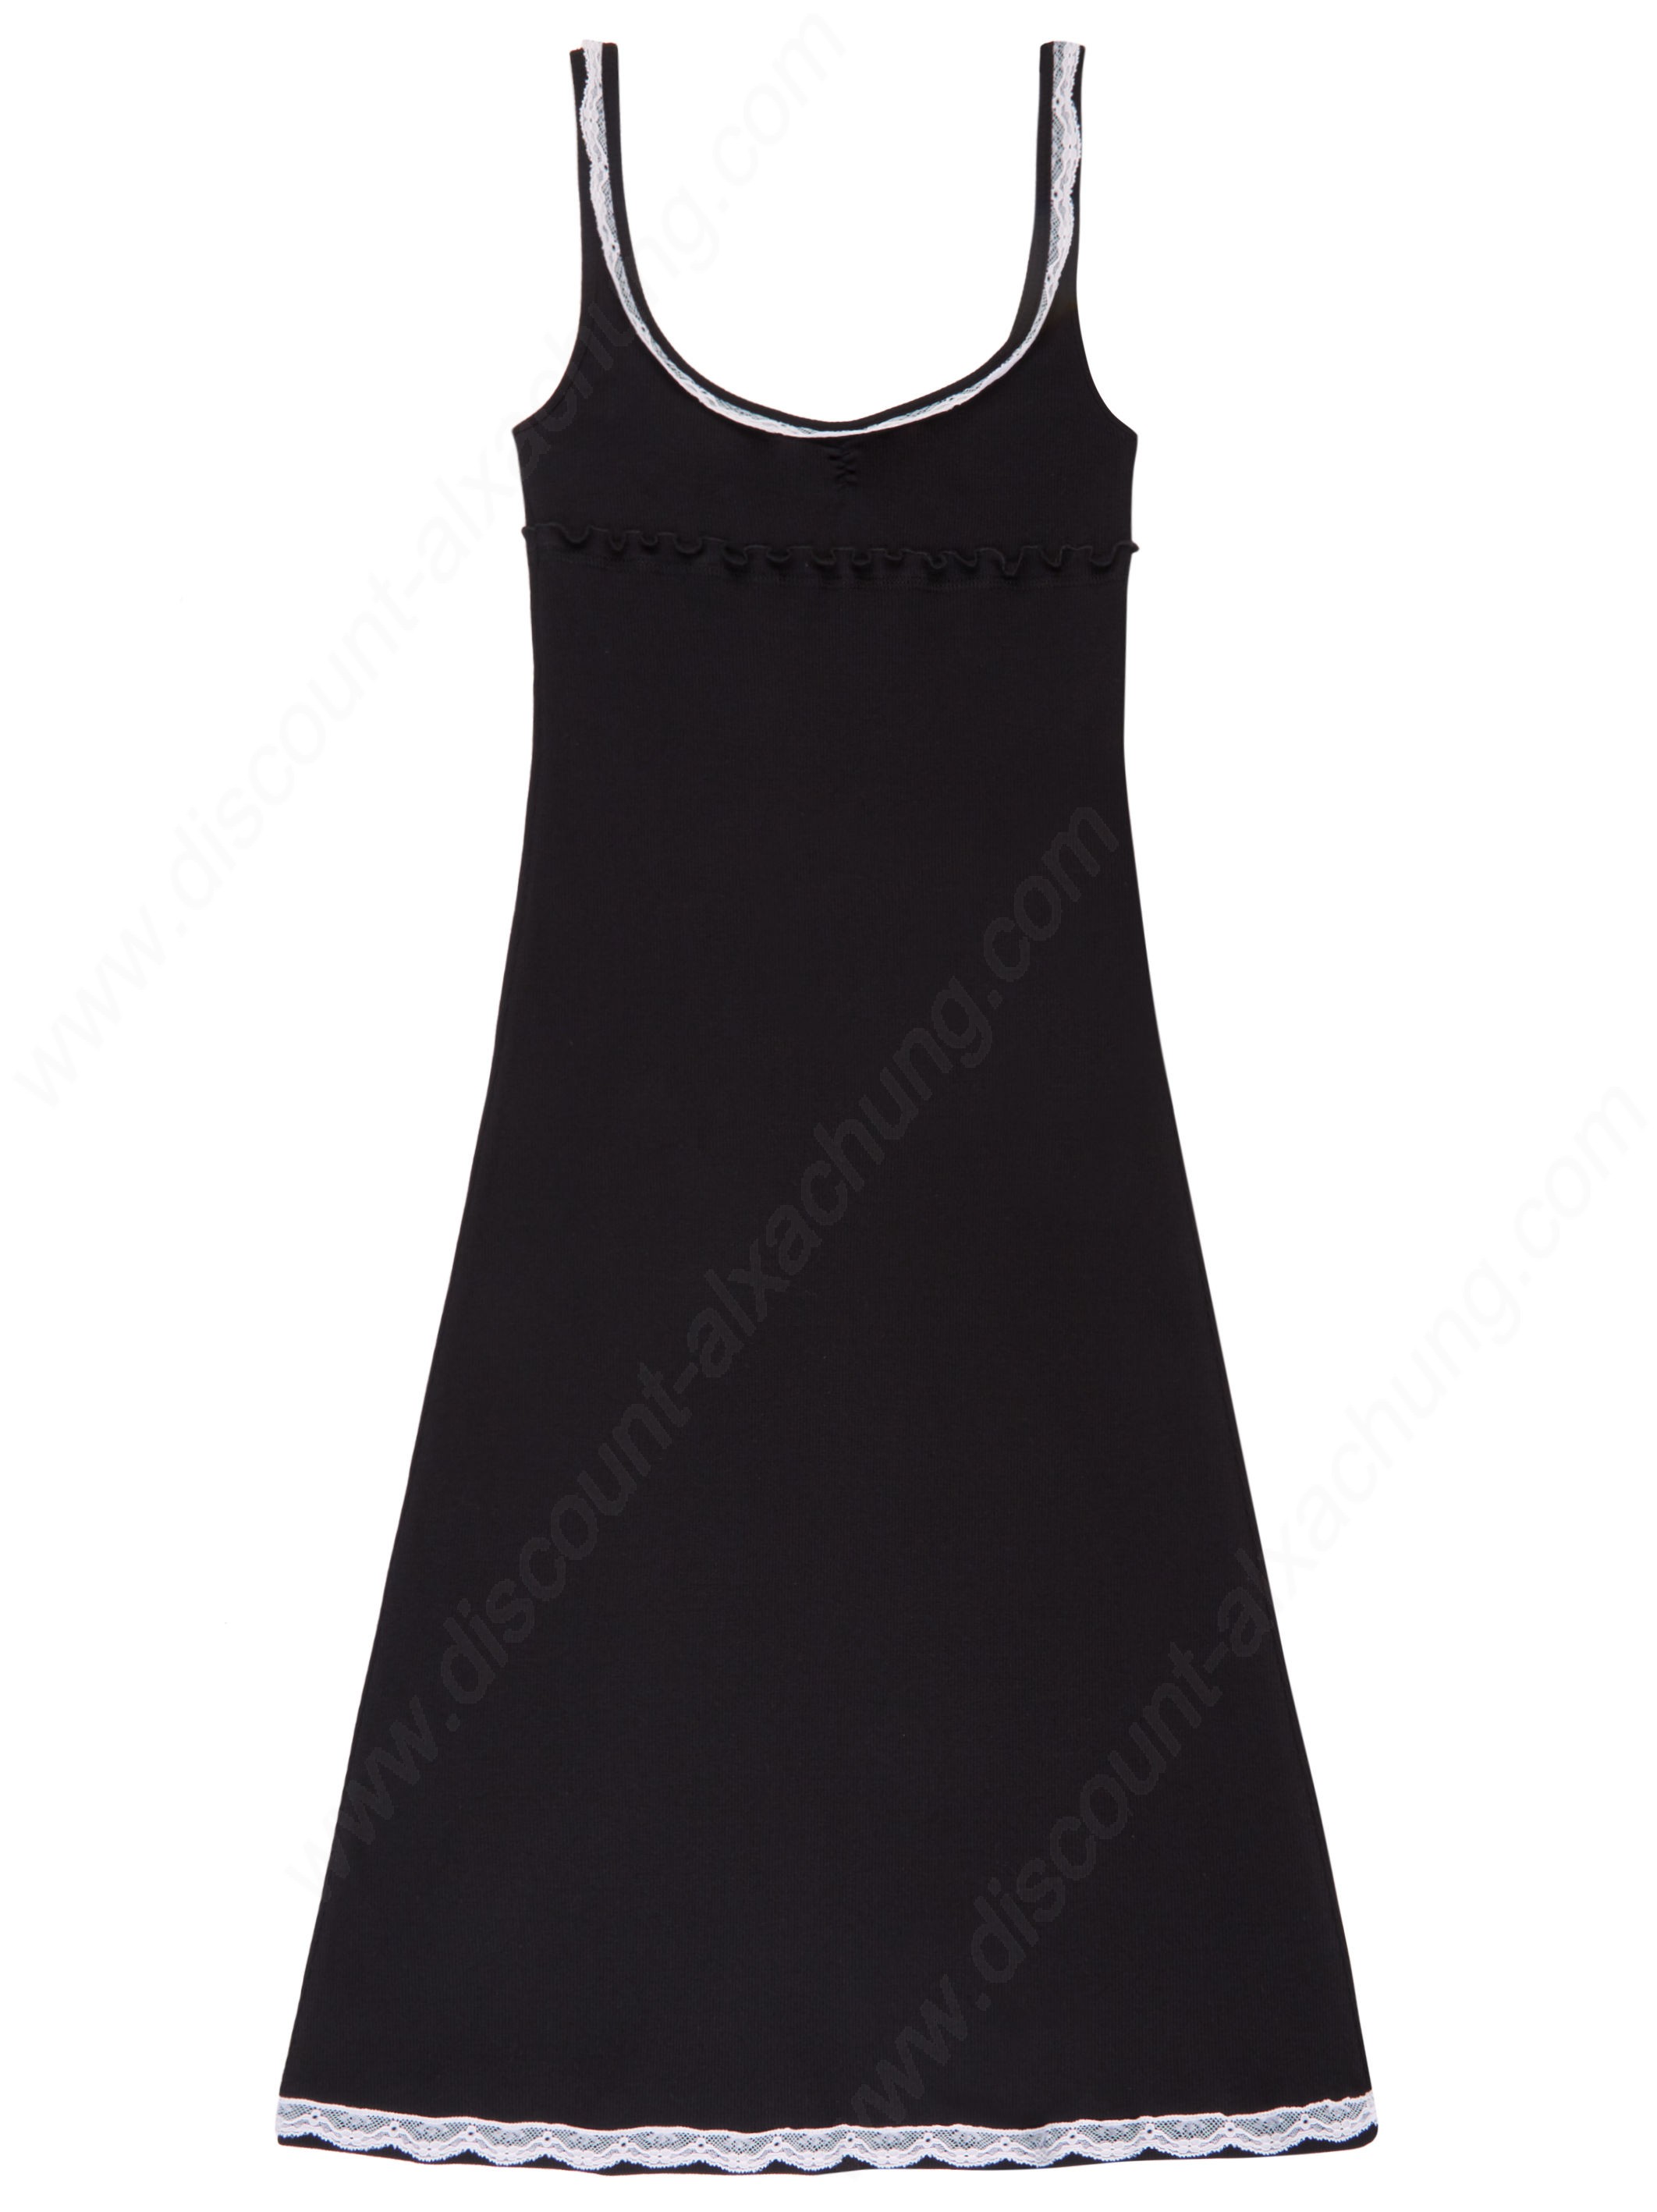 Alexachung Gathered Front Black Rib Dress - Alexachung Gathered Front Black Rib Dress